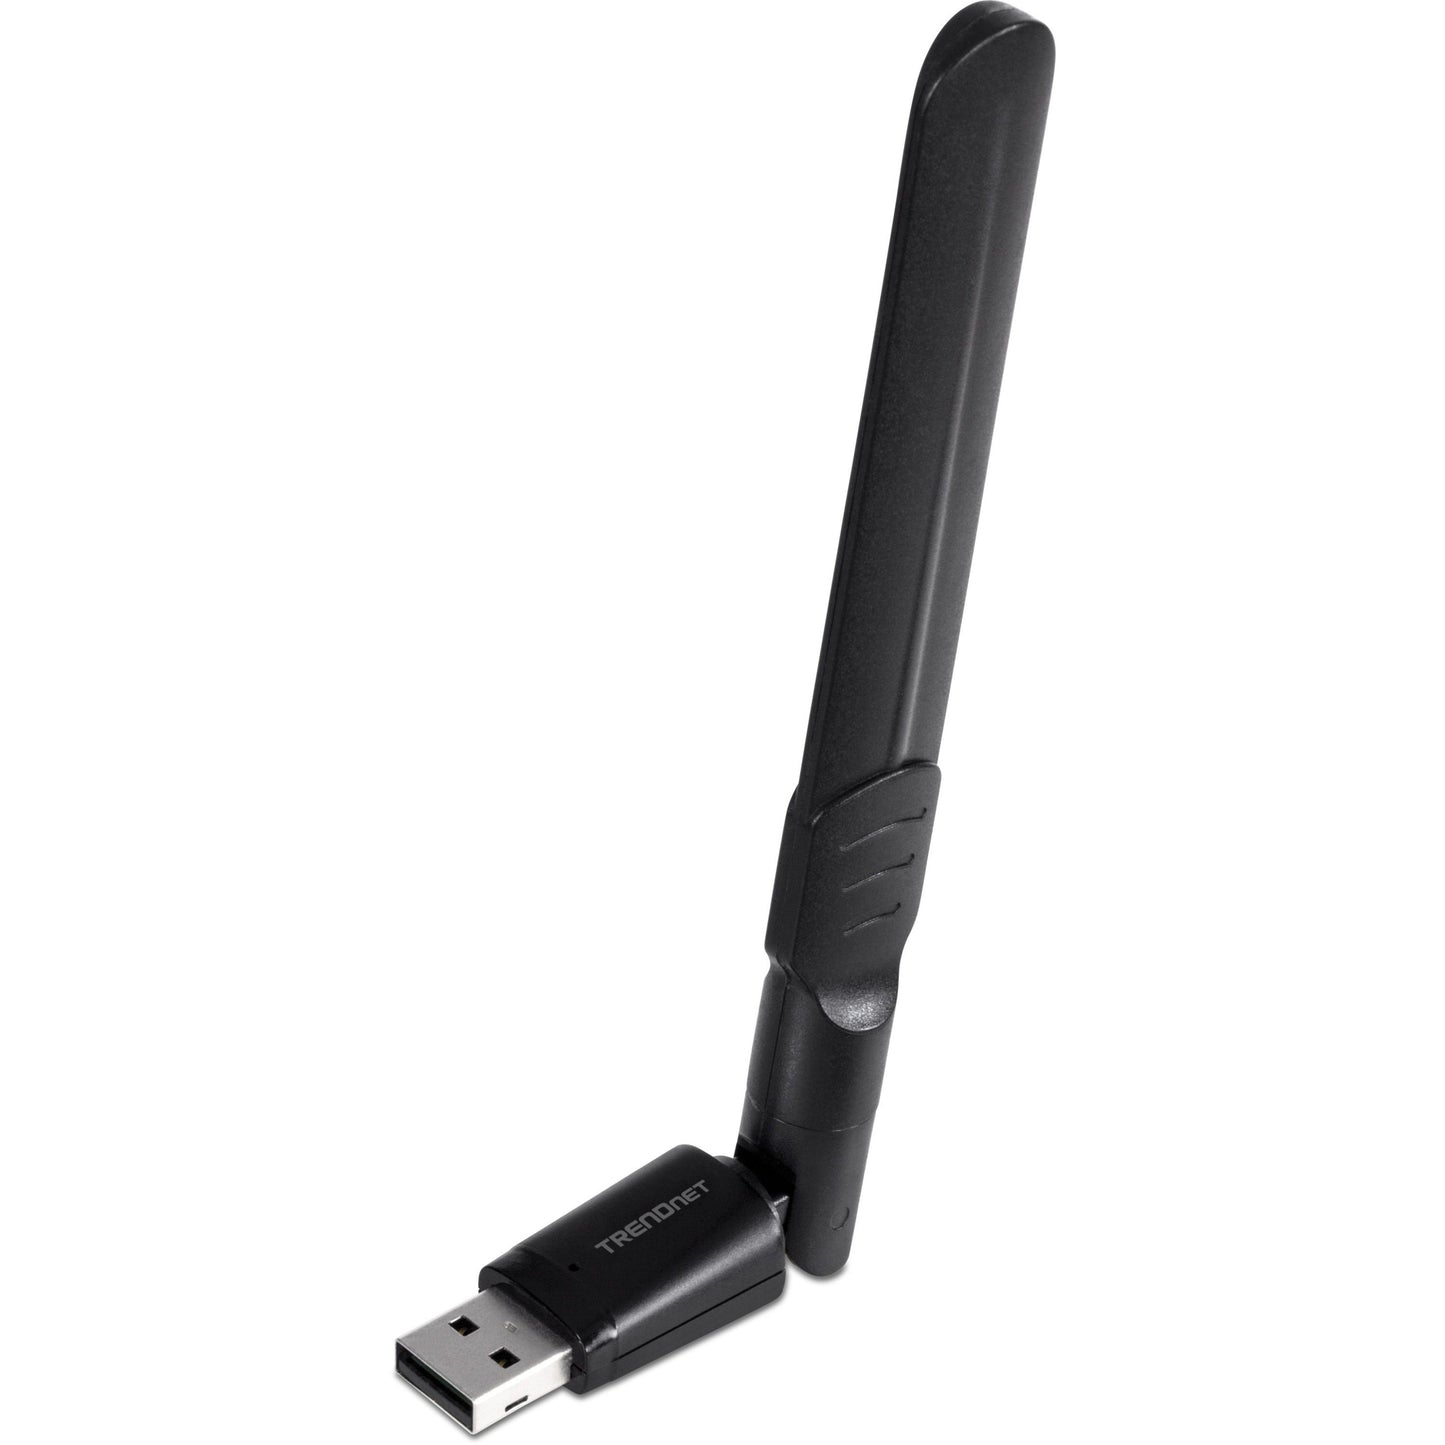 TRENDnet AC1200 High Gain Dual Band Wave 2 MU-MIMO Wireless USB USB 3.1 Gen 1 Adapter for Windows and Mac Black TEW-805UBH